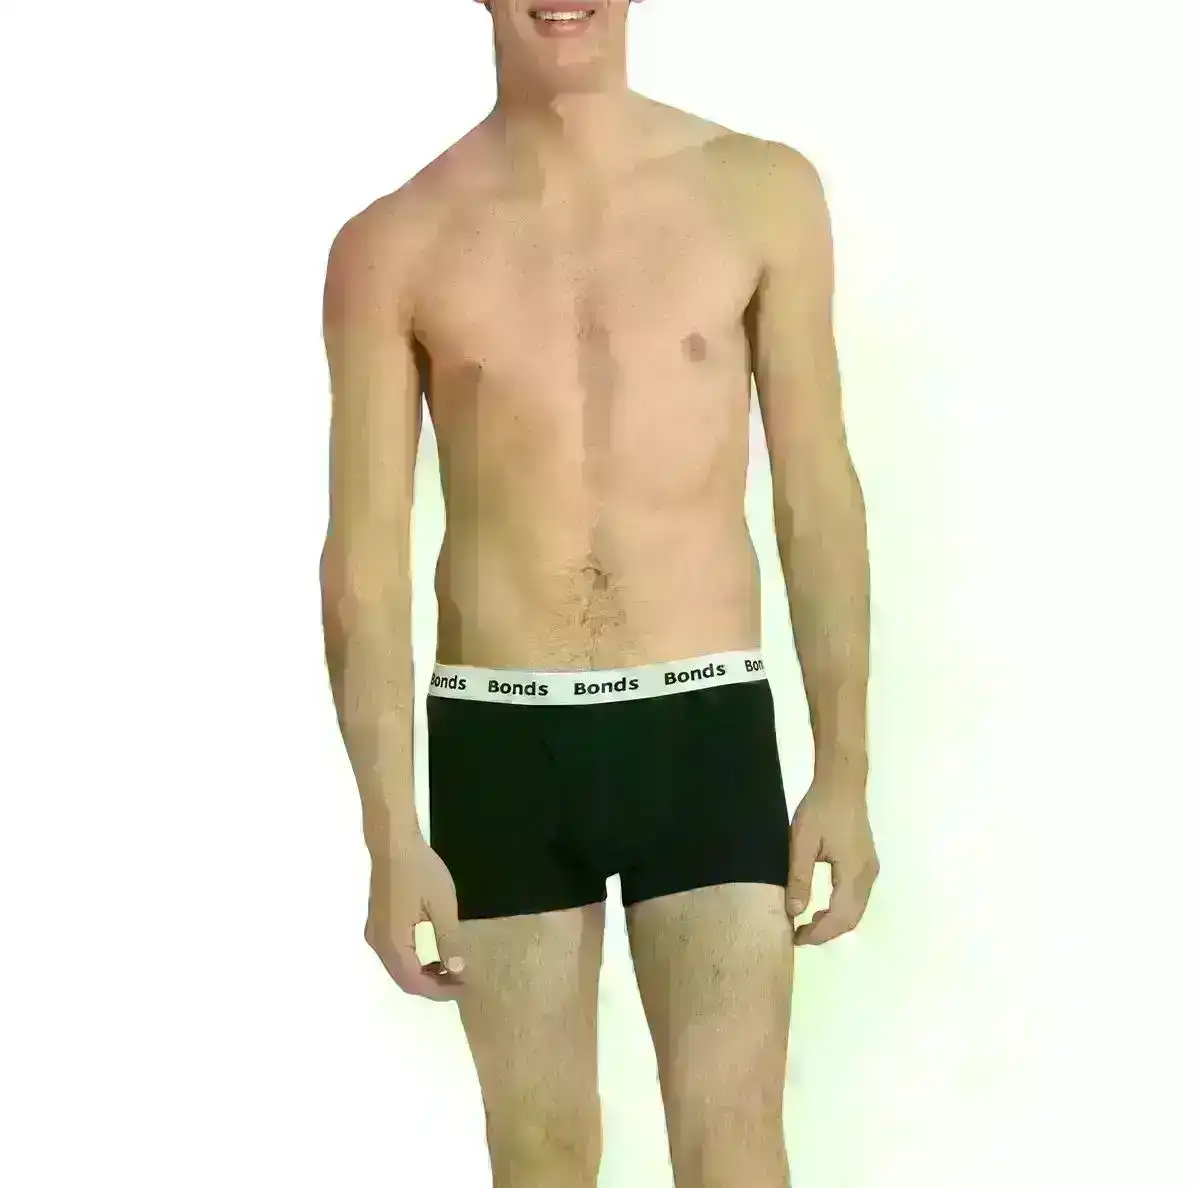 12 X Bonds Everyday Trunks Mens Underwear Assorted Shorts Briefs Jocks